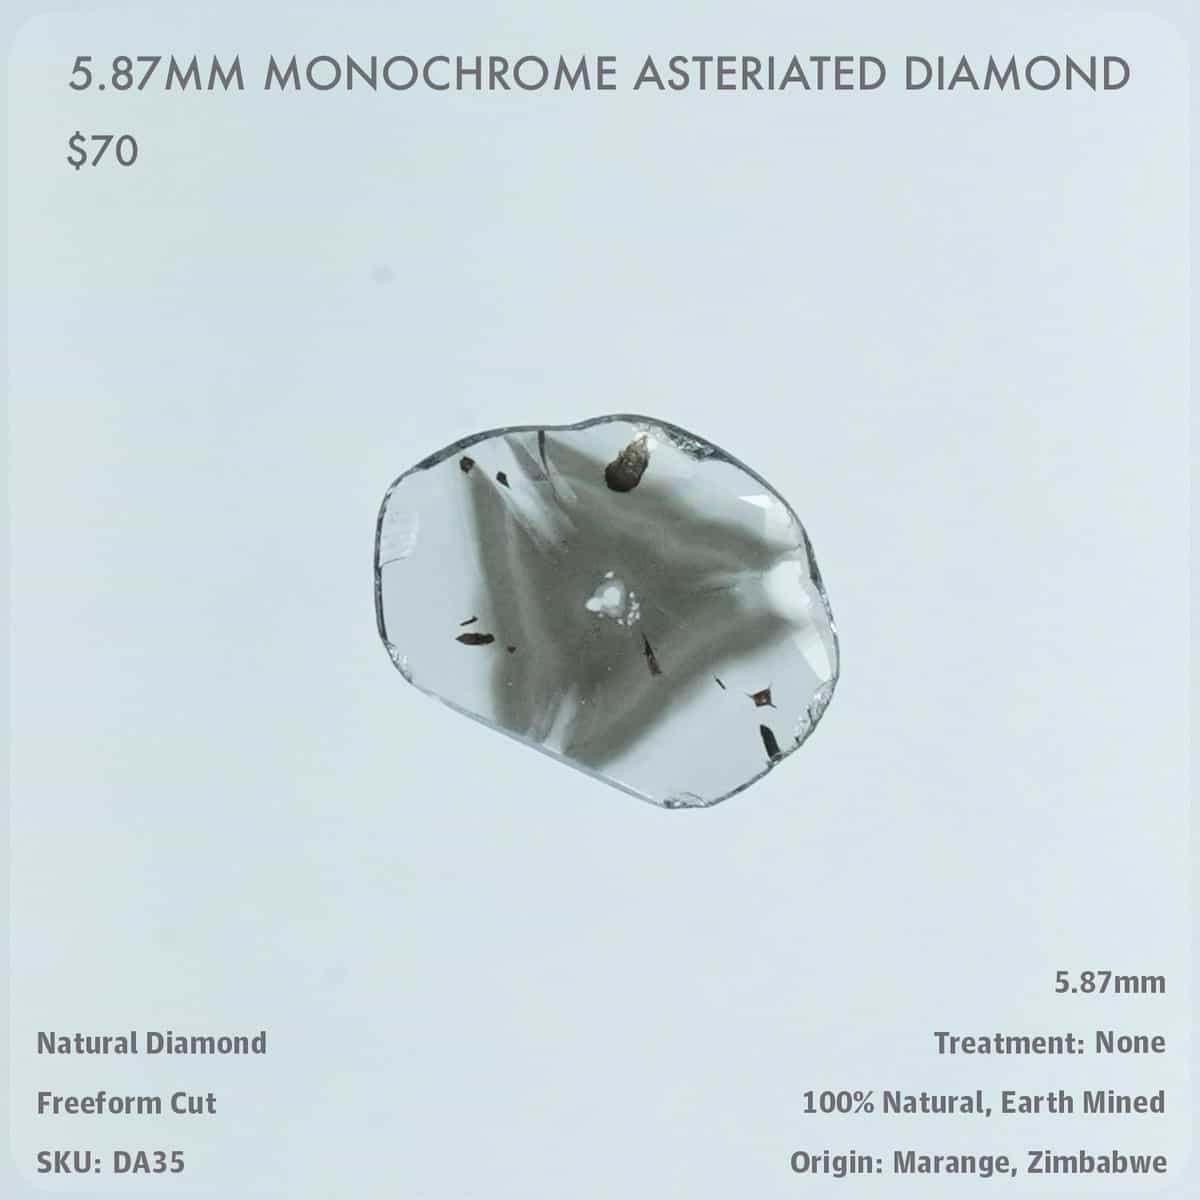 5.87mm Monochrome Asteriated Diamond